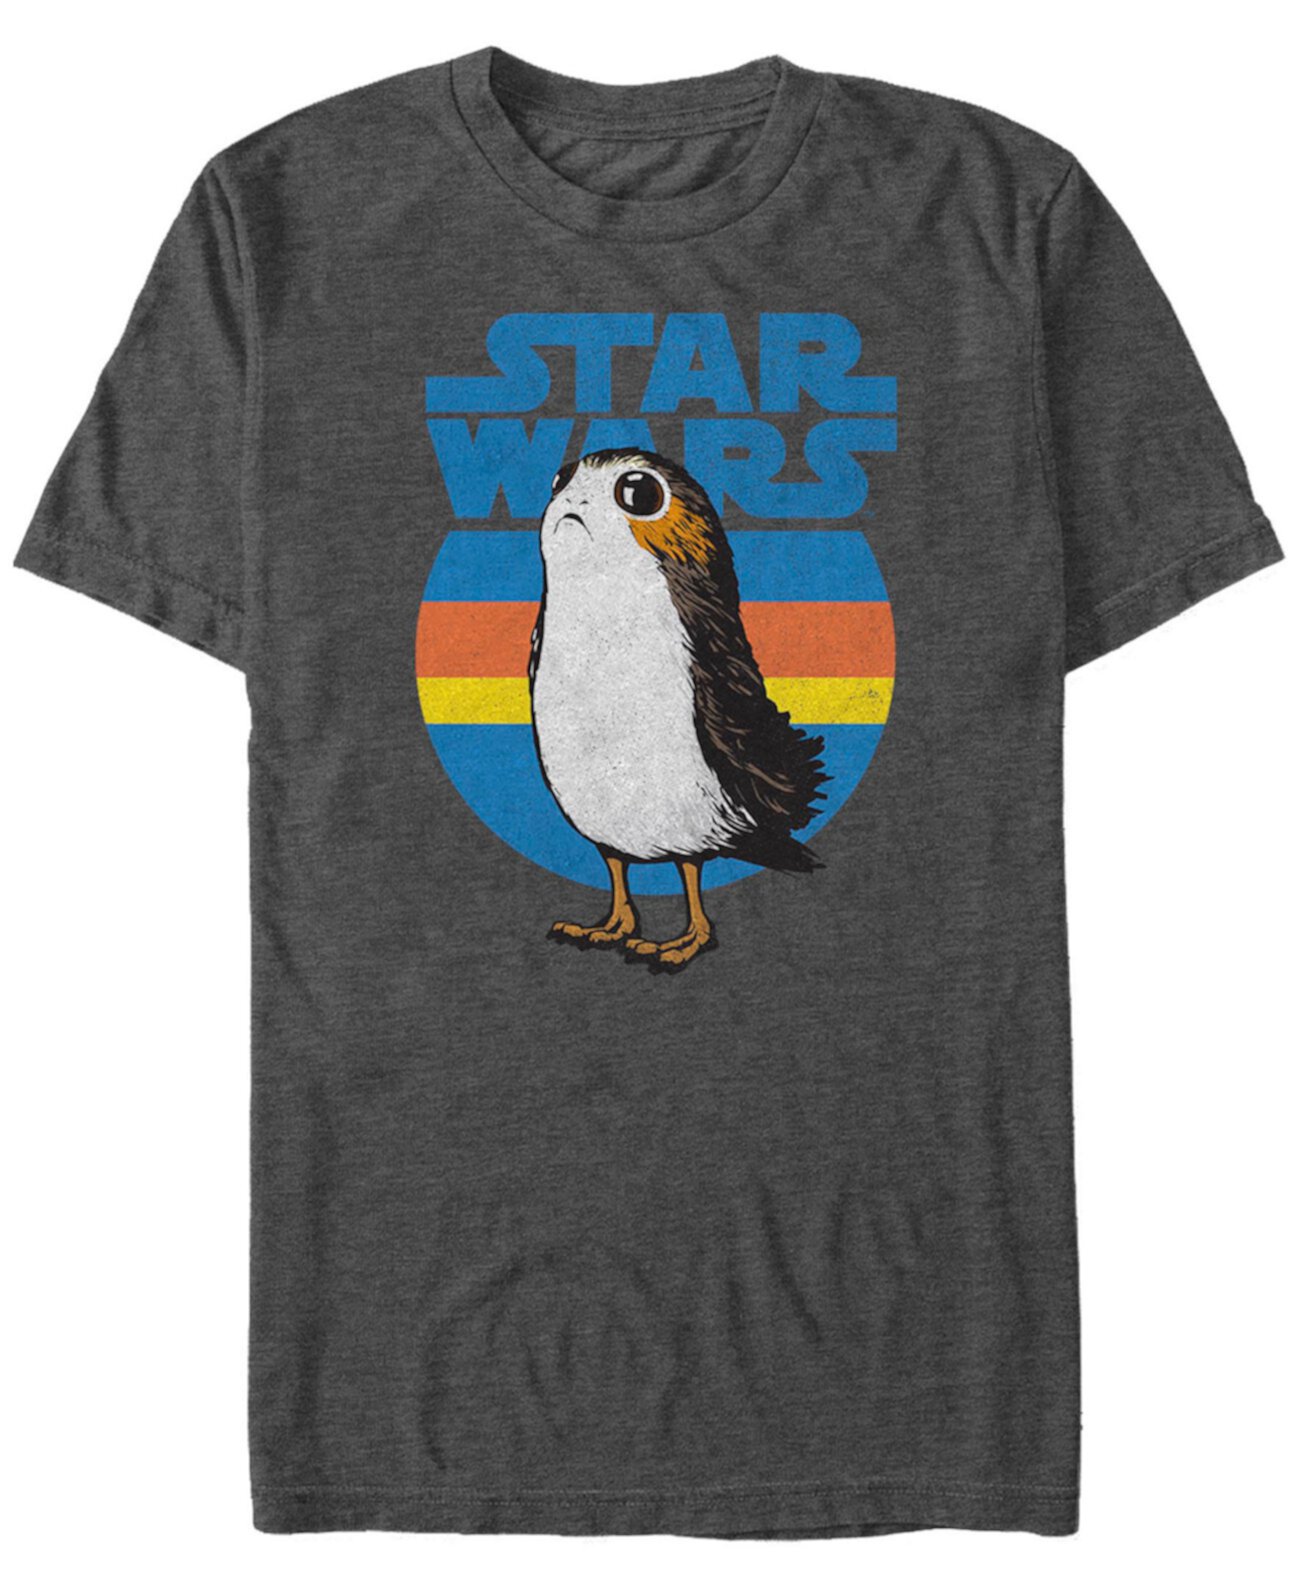 Мужская футболка с логотипом Star Wars Last Jedi Porg в полоску с короткими рукавами FIFTH SUN